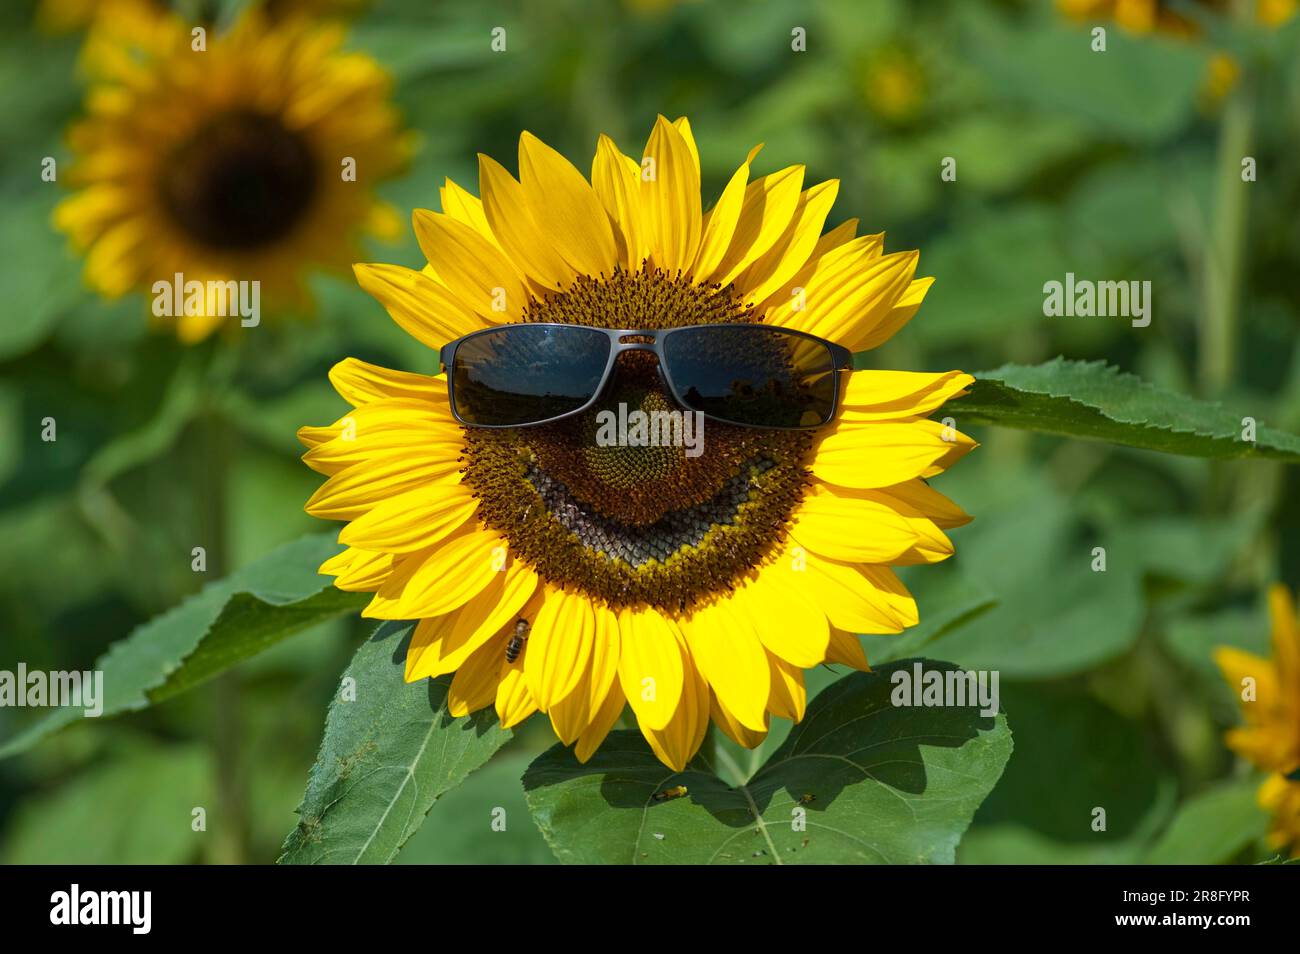 Sunflower (Helianthus anuus) wearing sunglasses, laughing Stock Photo